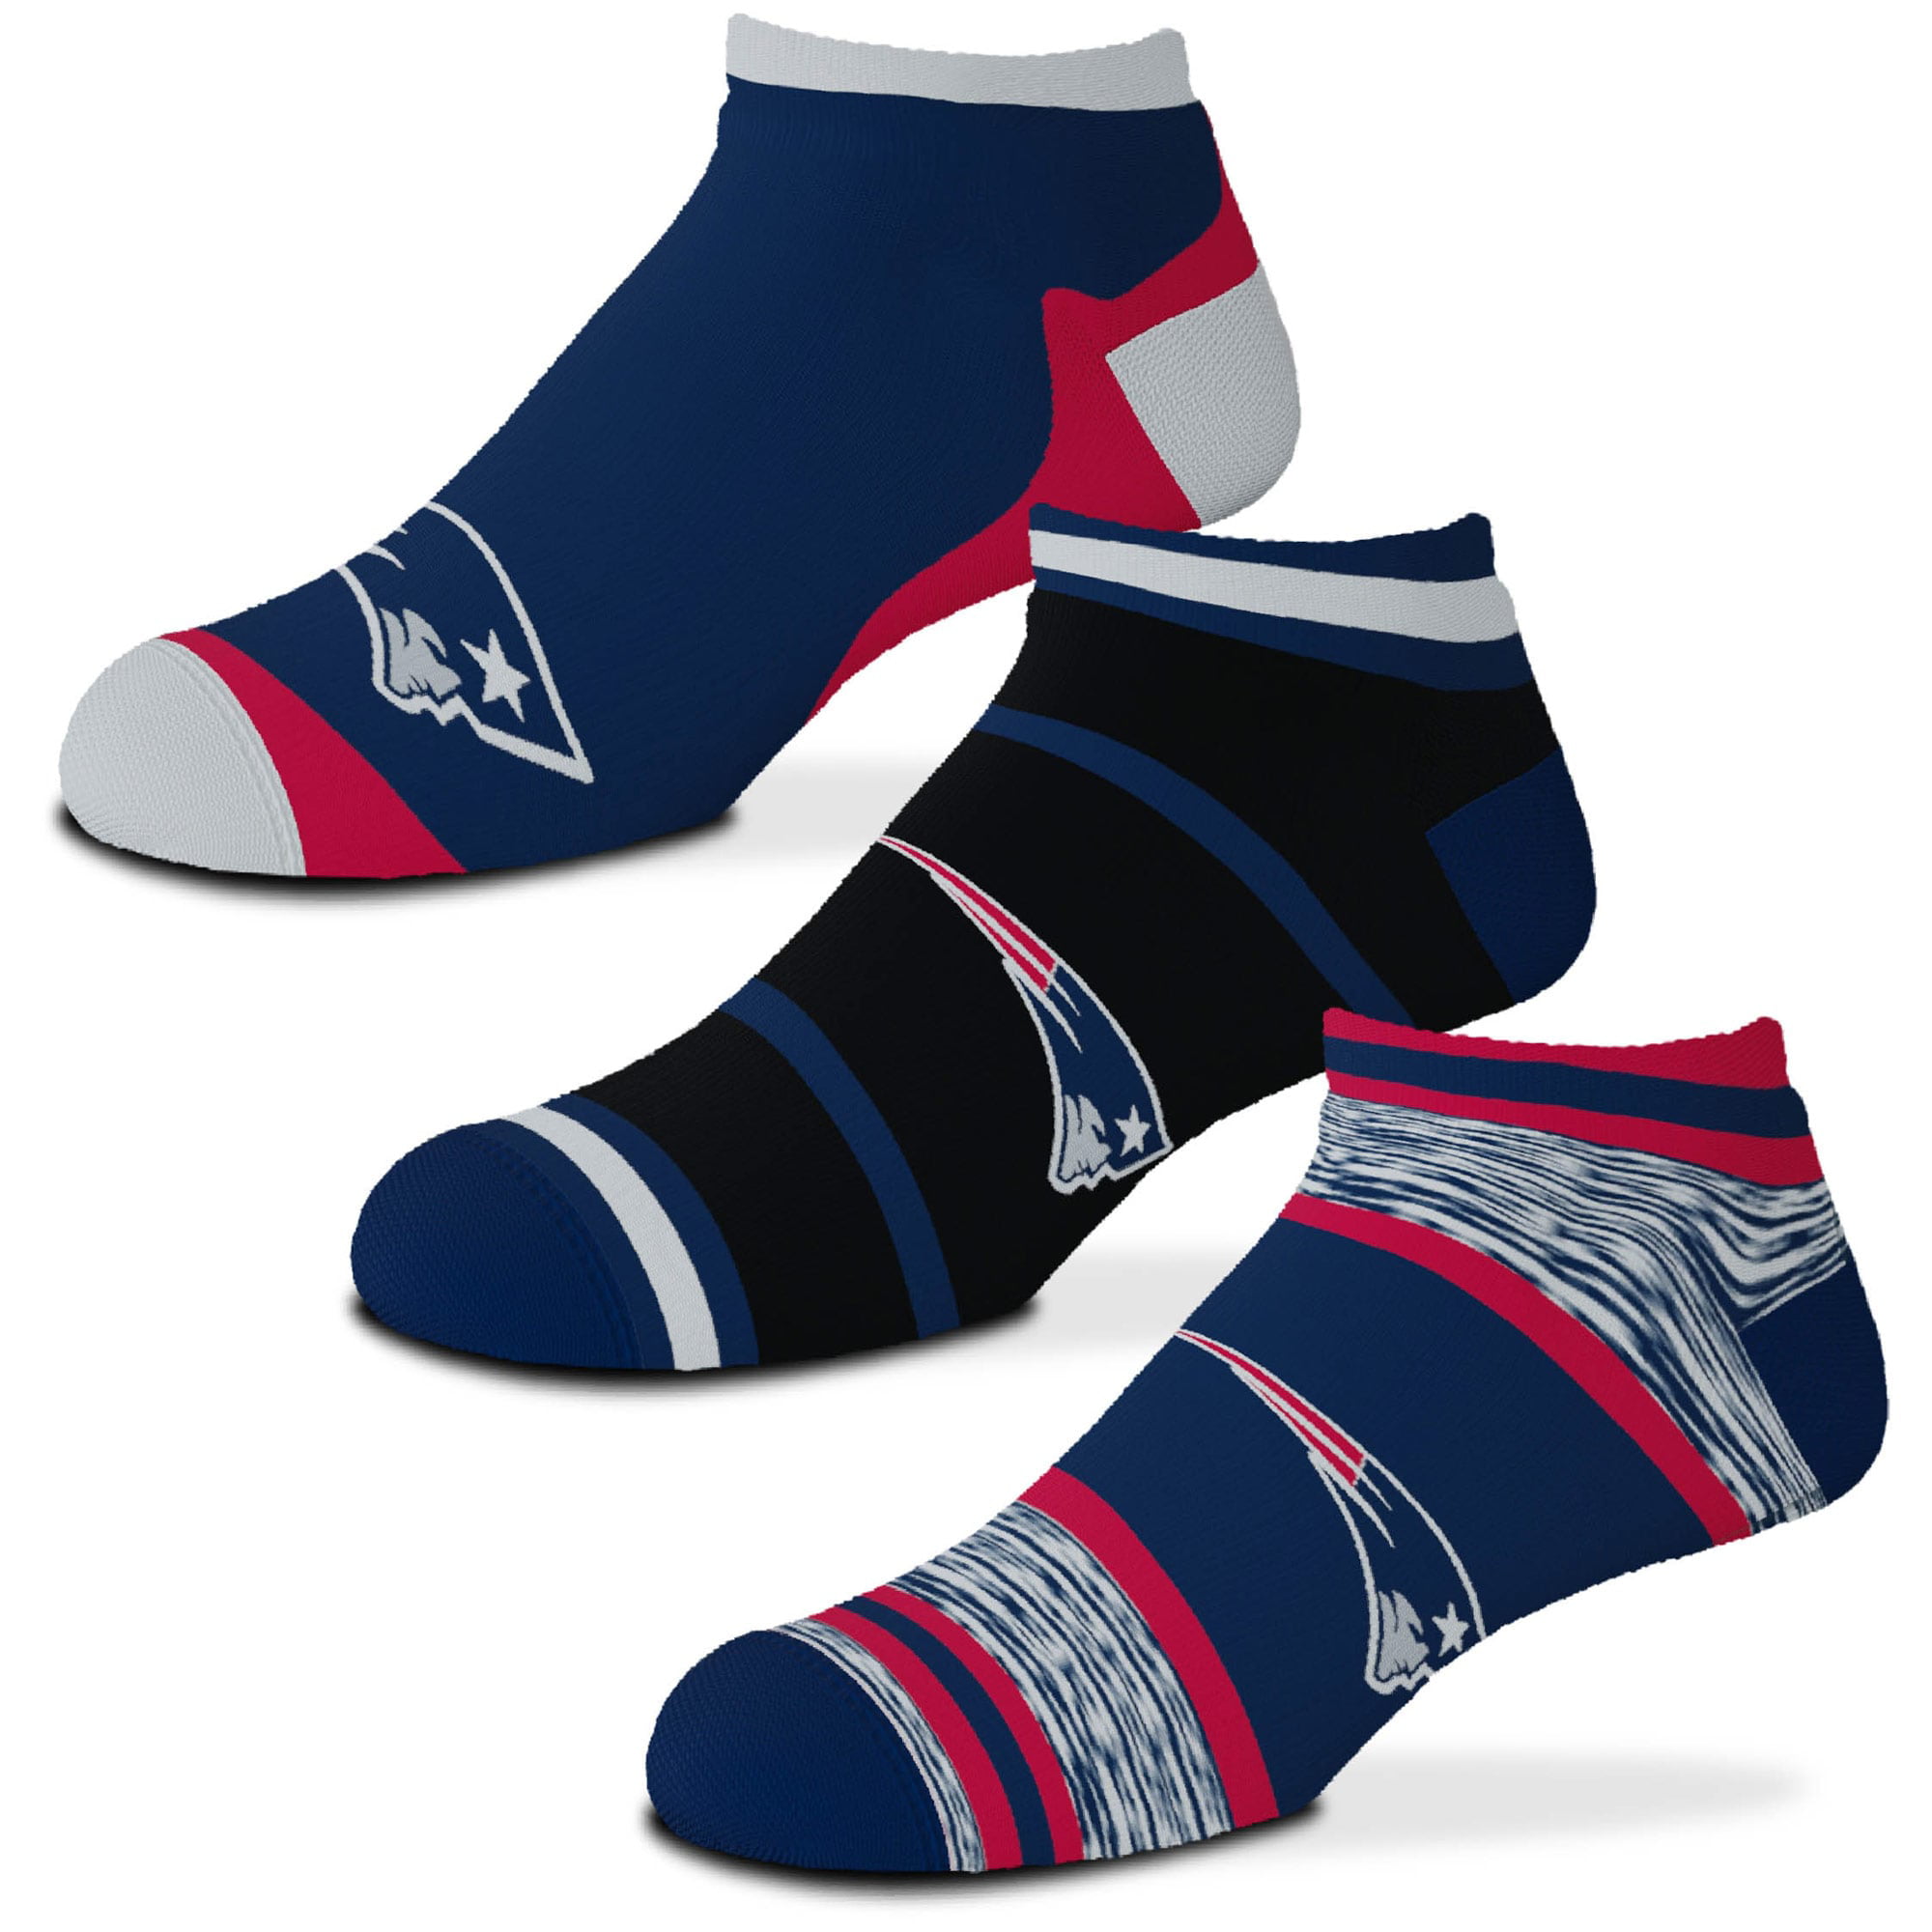 JollyRascals Boys Socks 3 Pairs Ankle Football Socks Kids New 3 PACK Green Blue Grey Red Colors UK Size 6-8.5 9-12 12-3.5